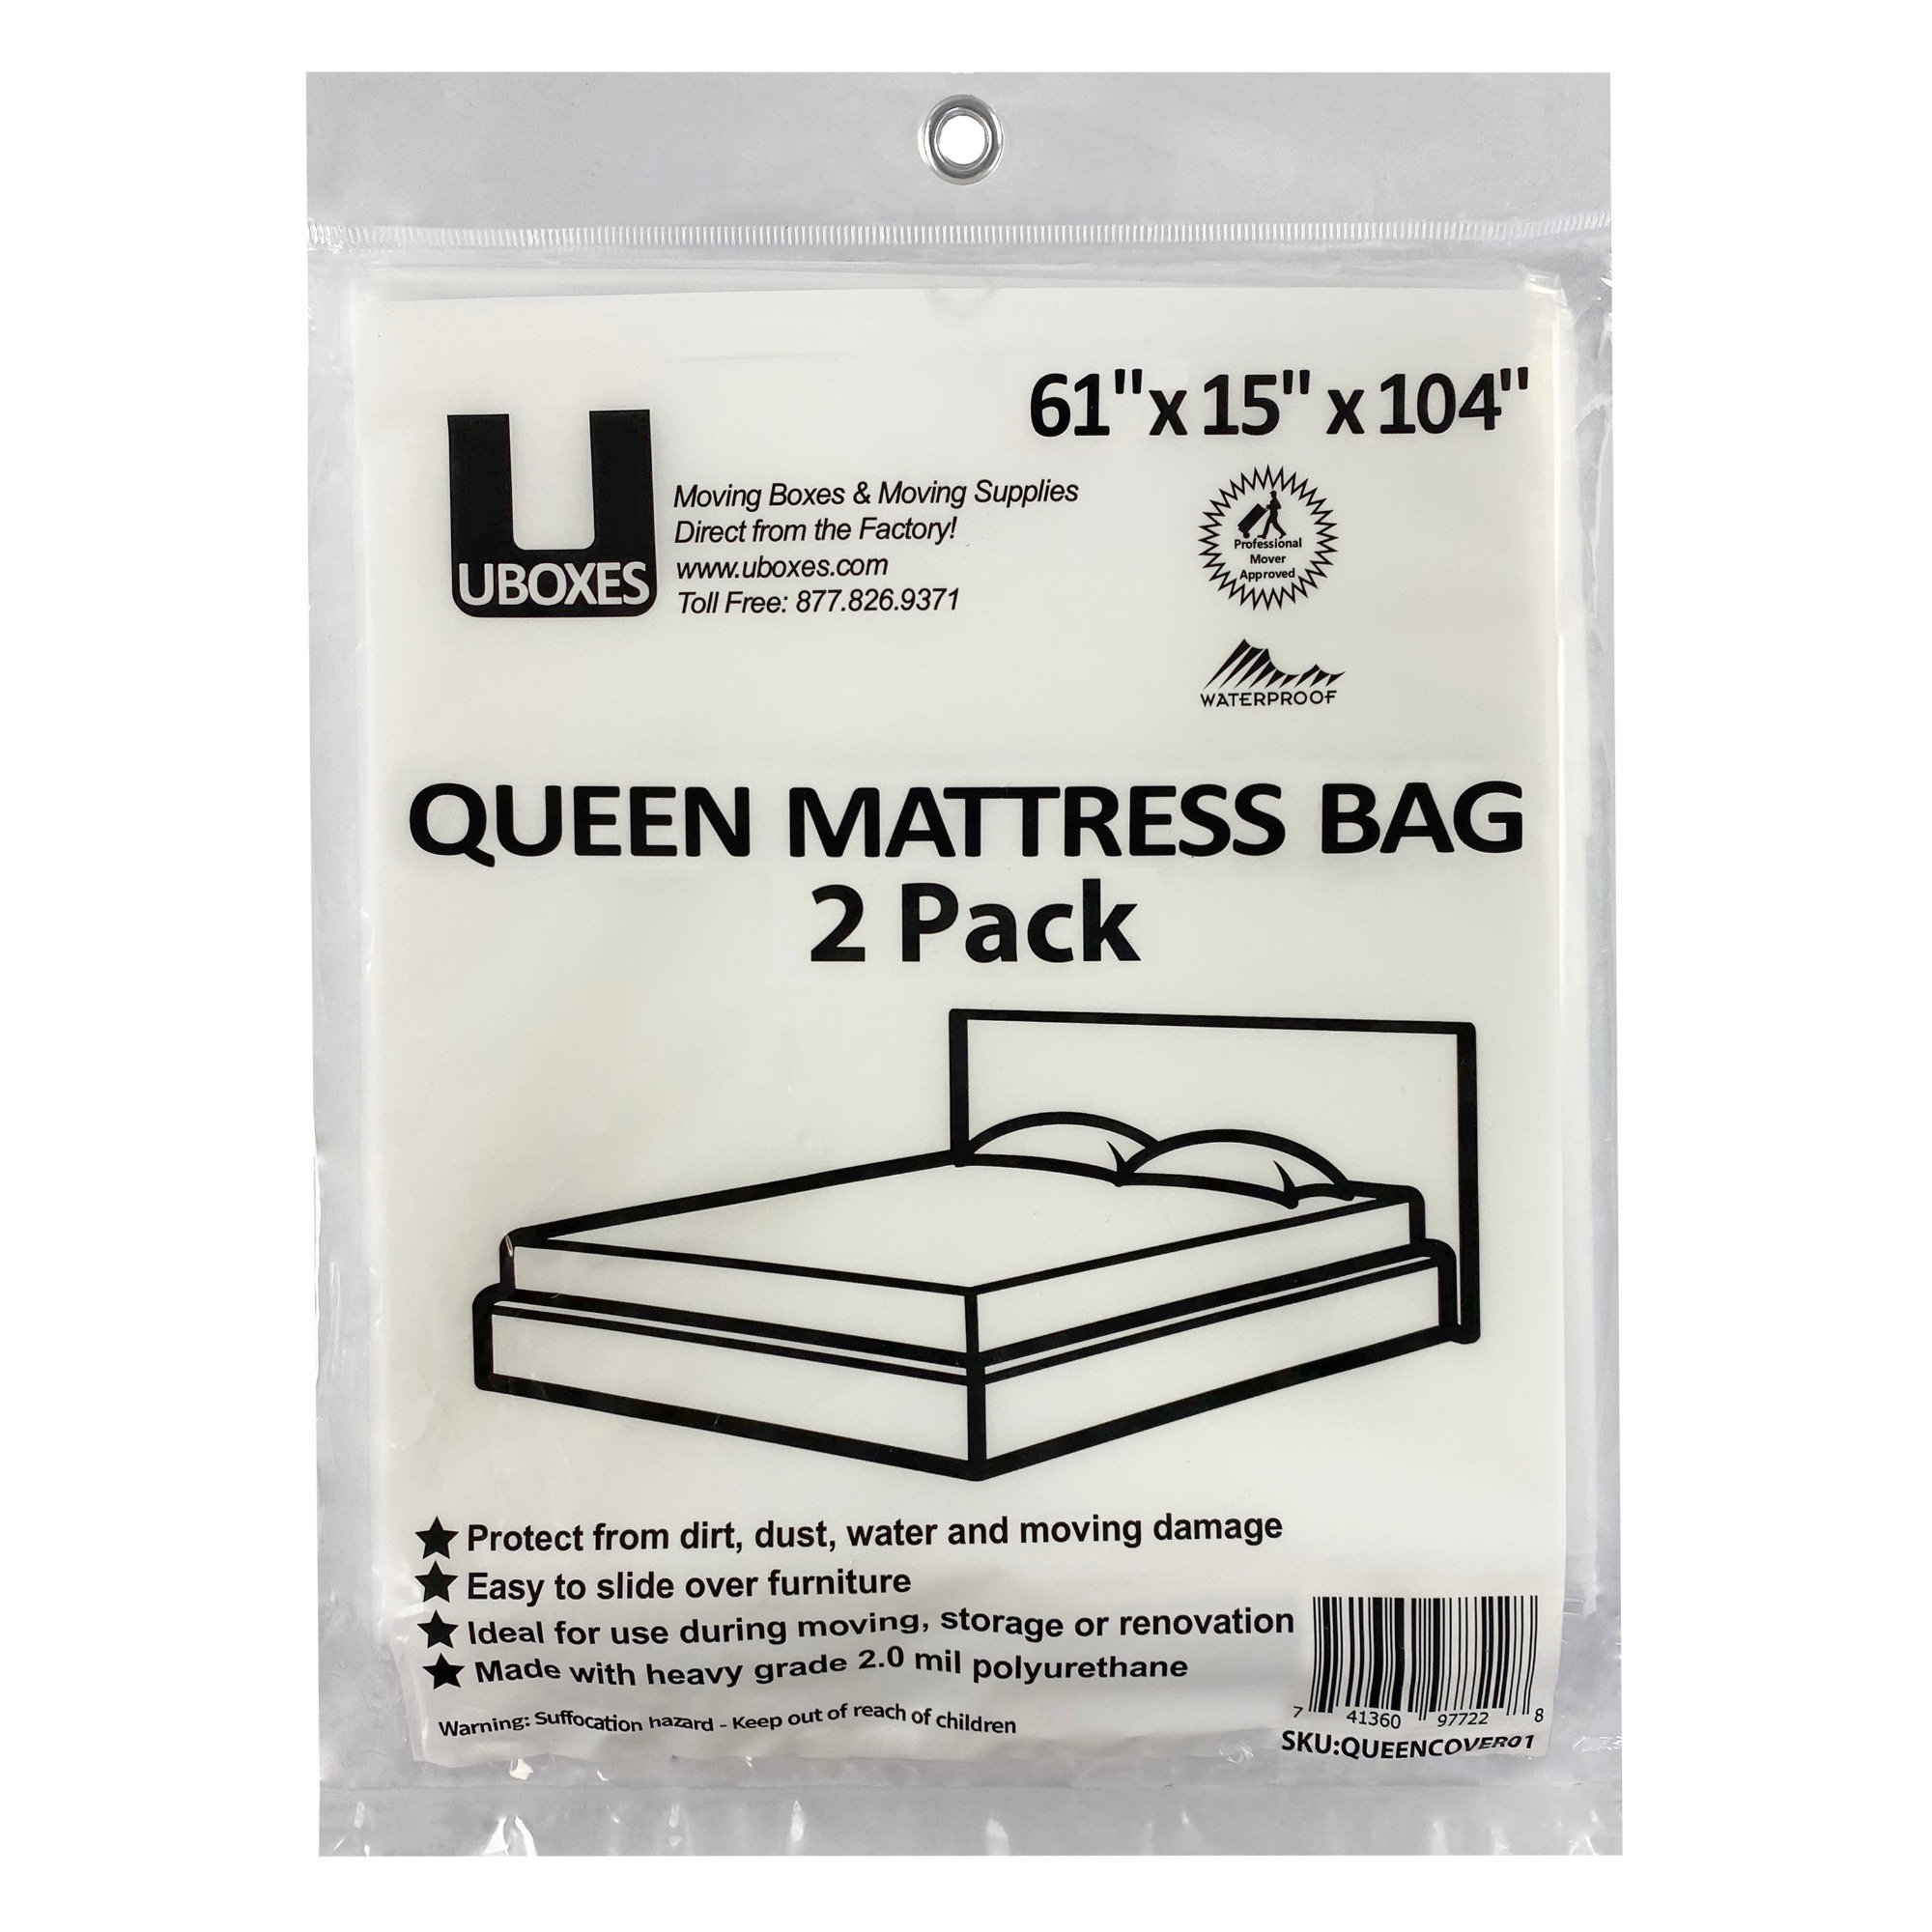 Poly mattress bag